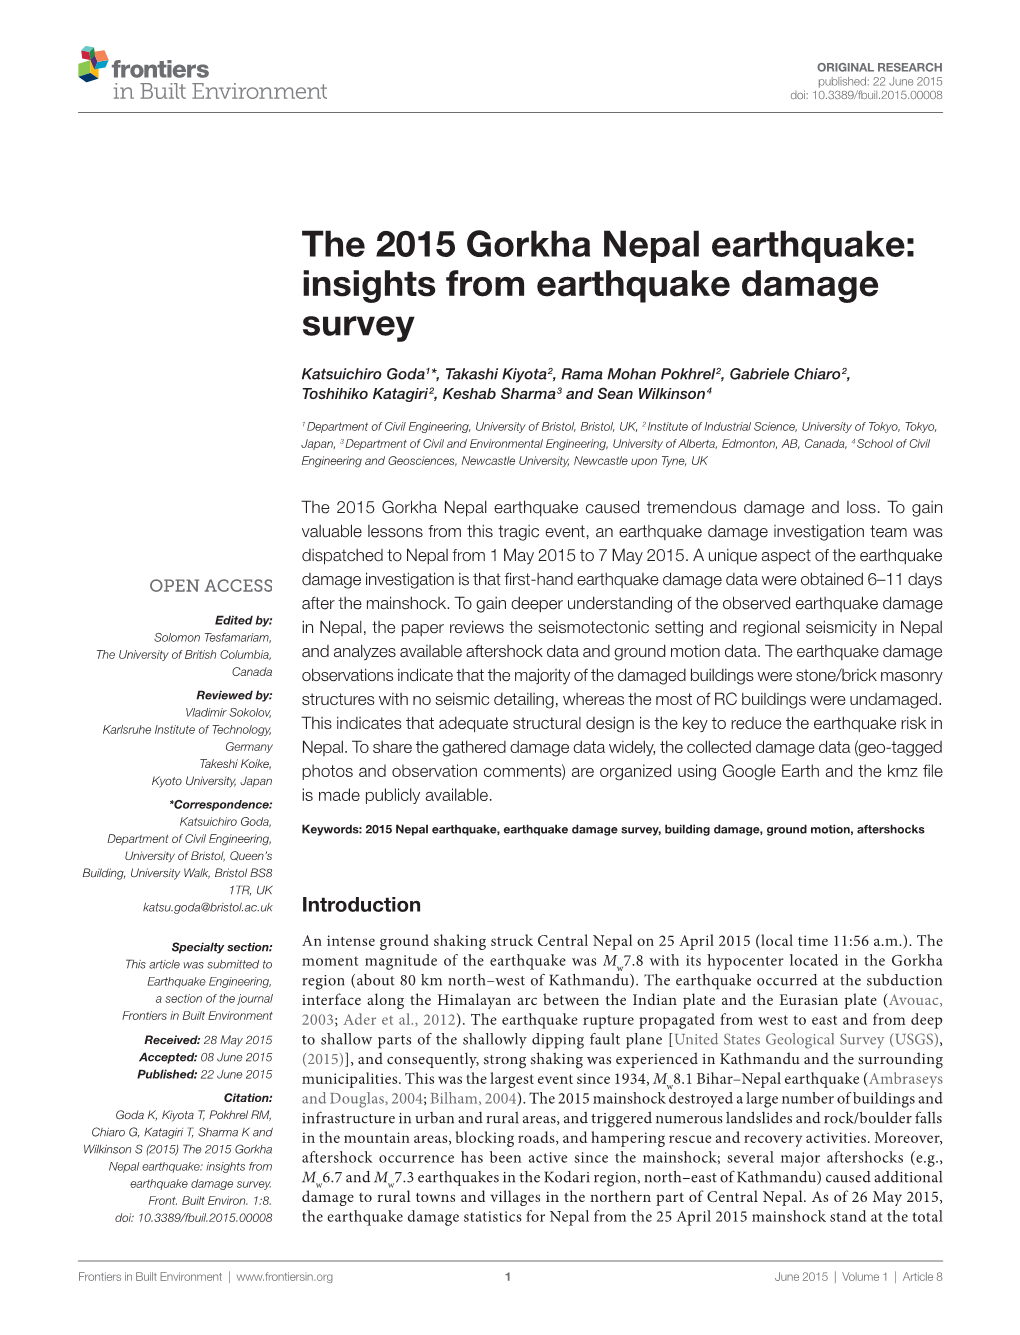 The 2015 Gorkha Nepal Earthquake: Insights from Earthquake Damage Survey